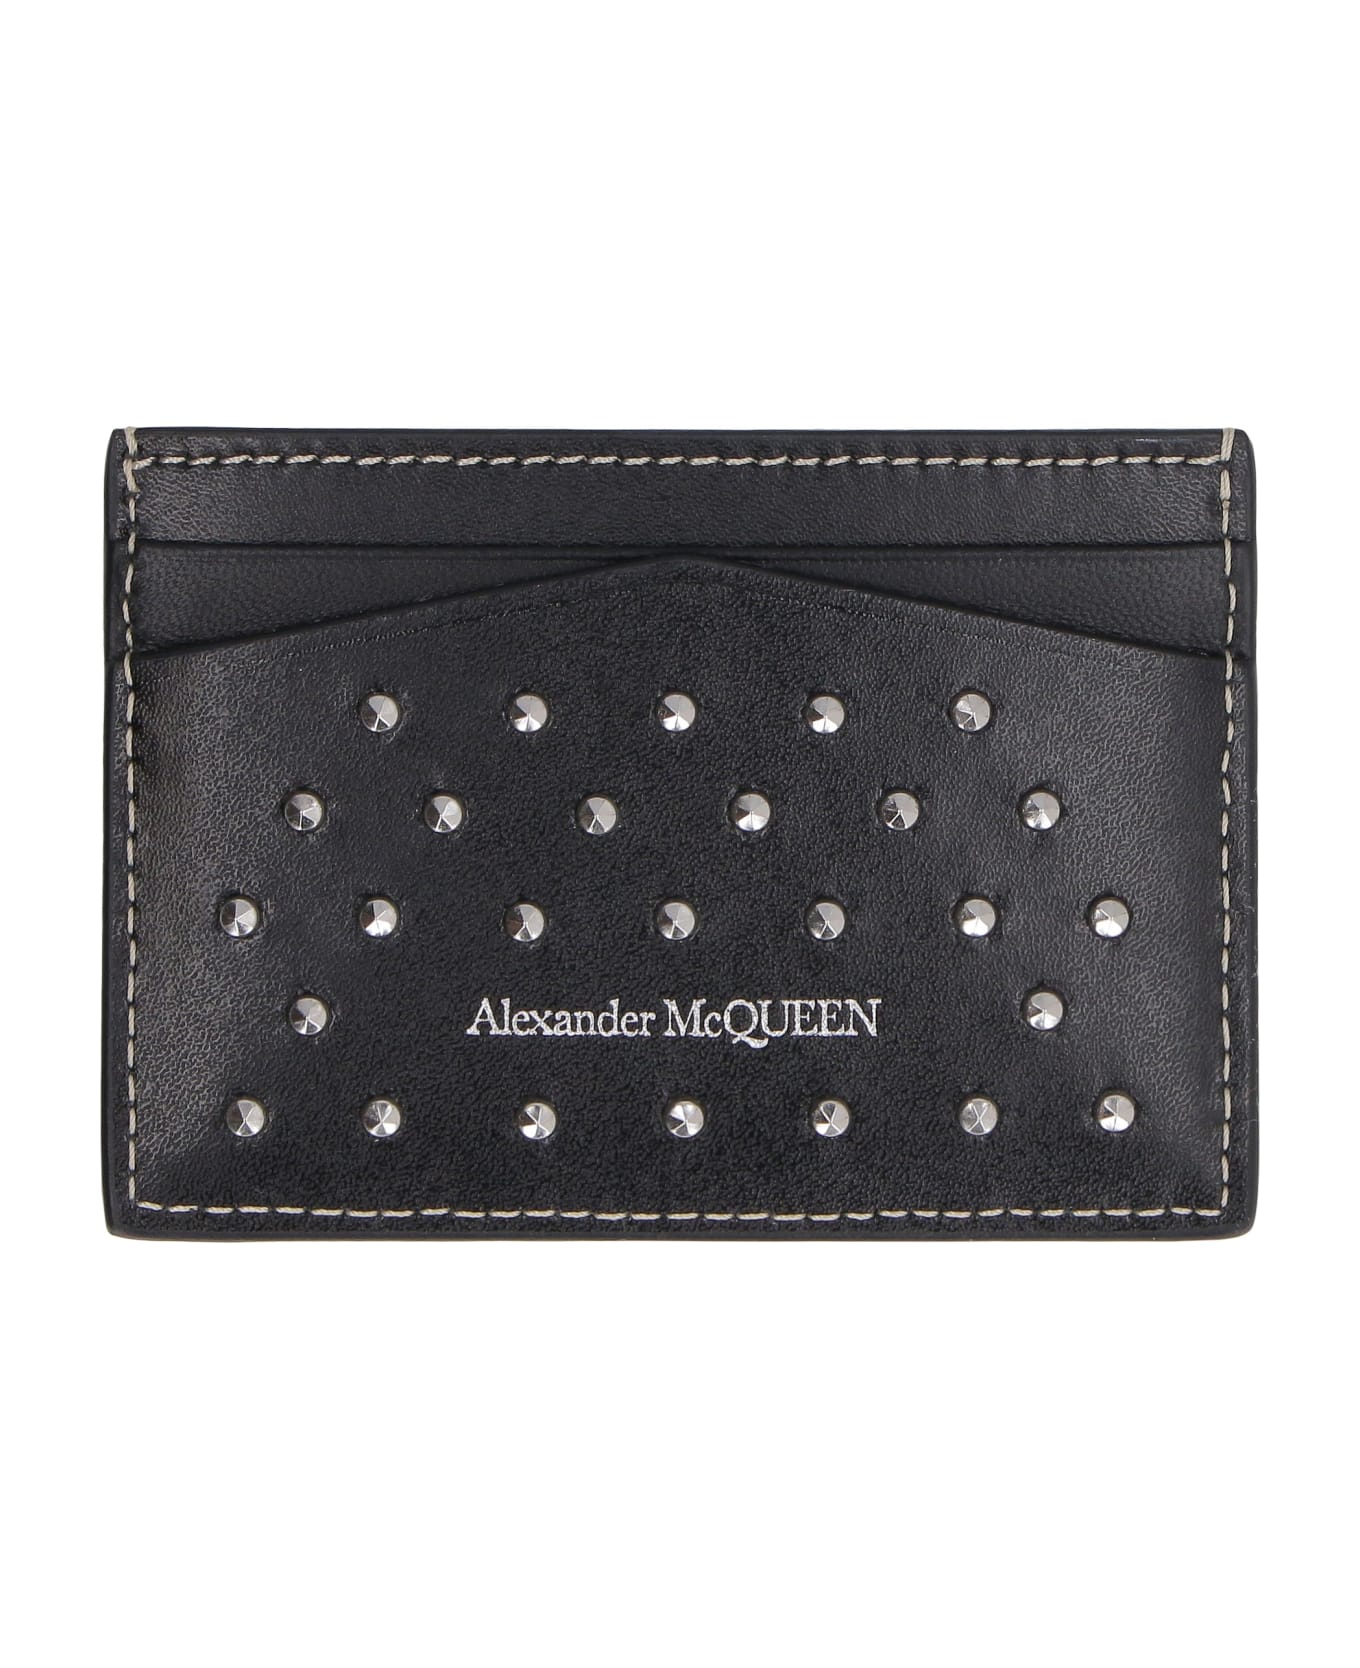 Alexander McQueen Skull Studded Leather Wallet - black 財布